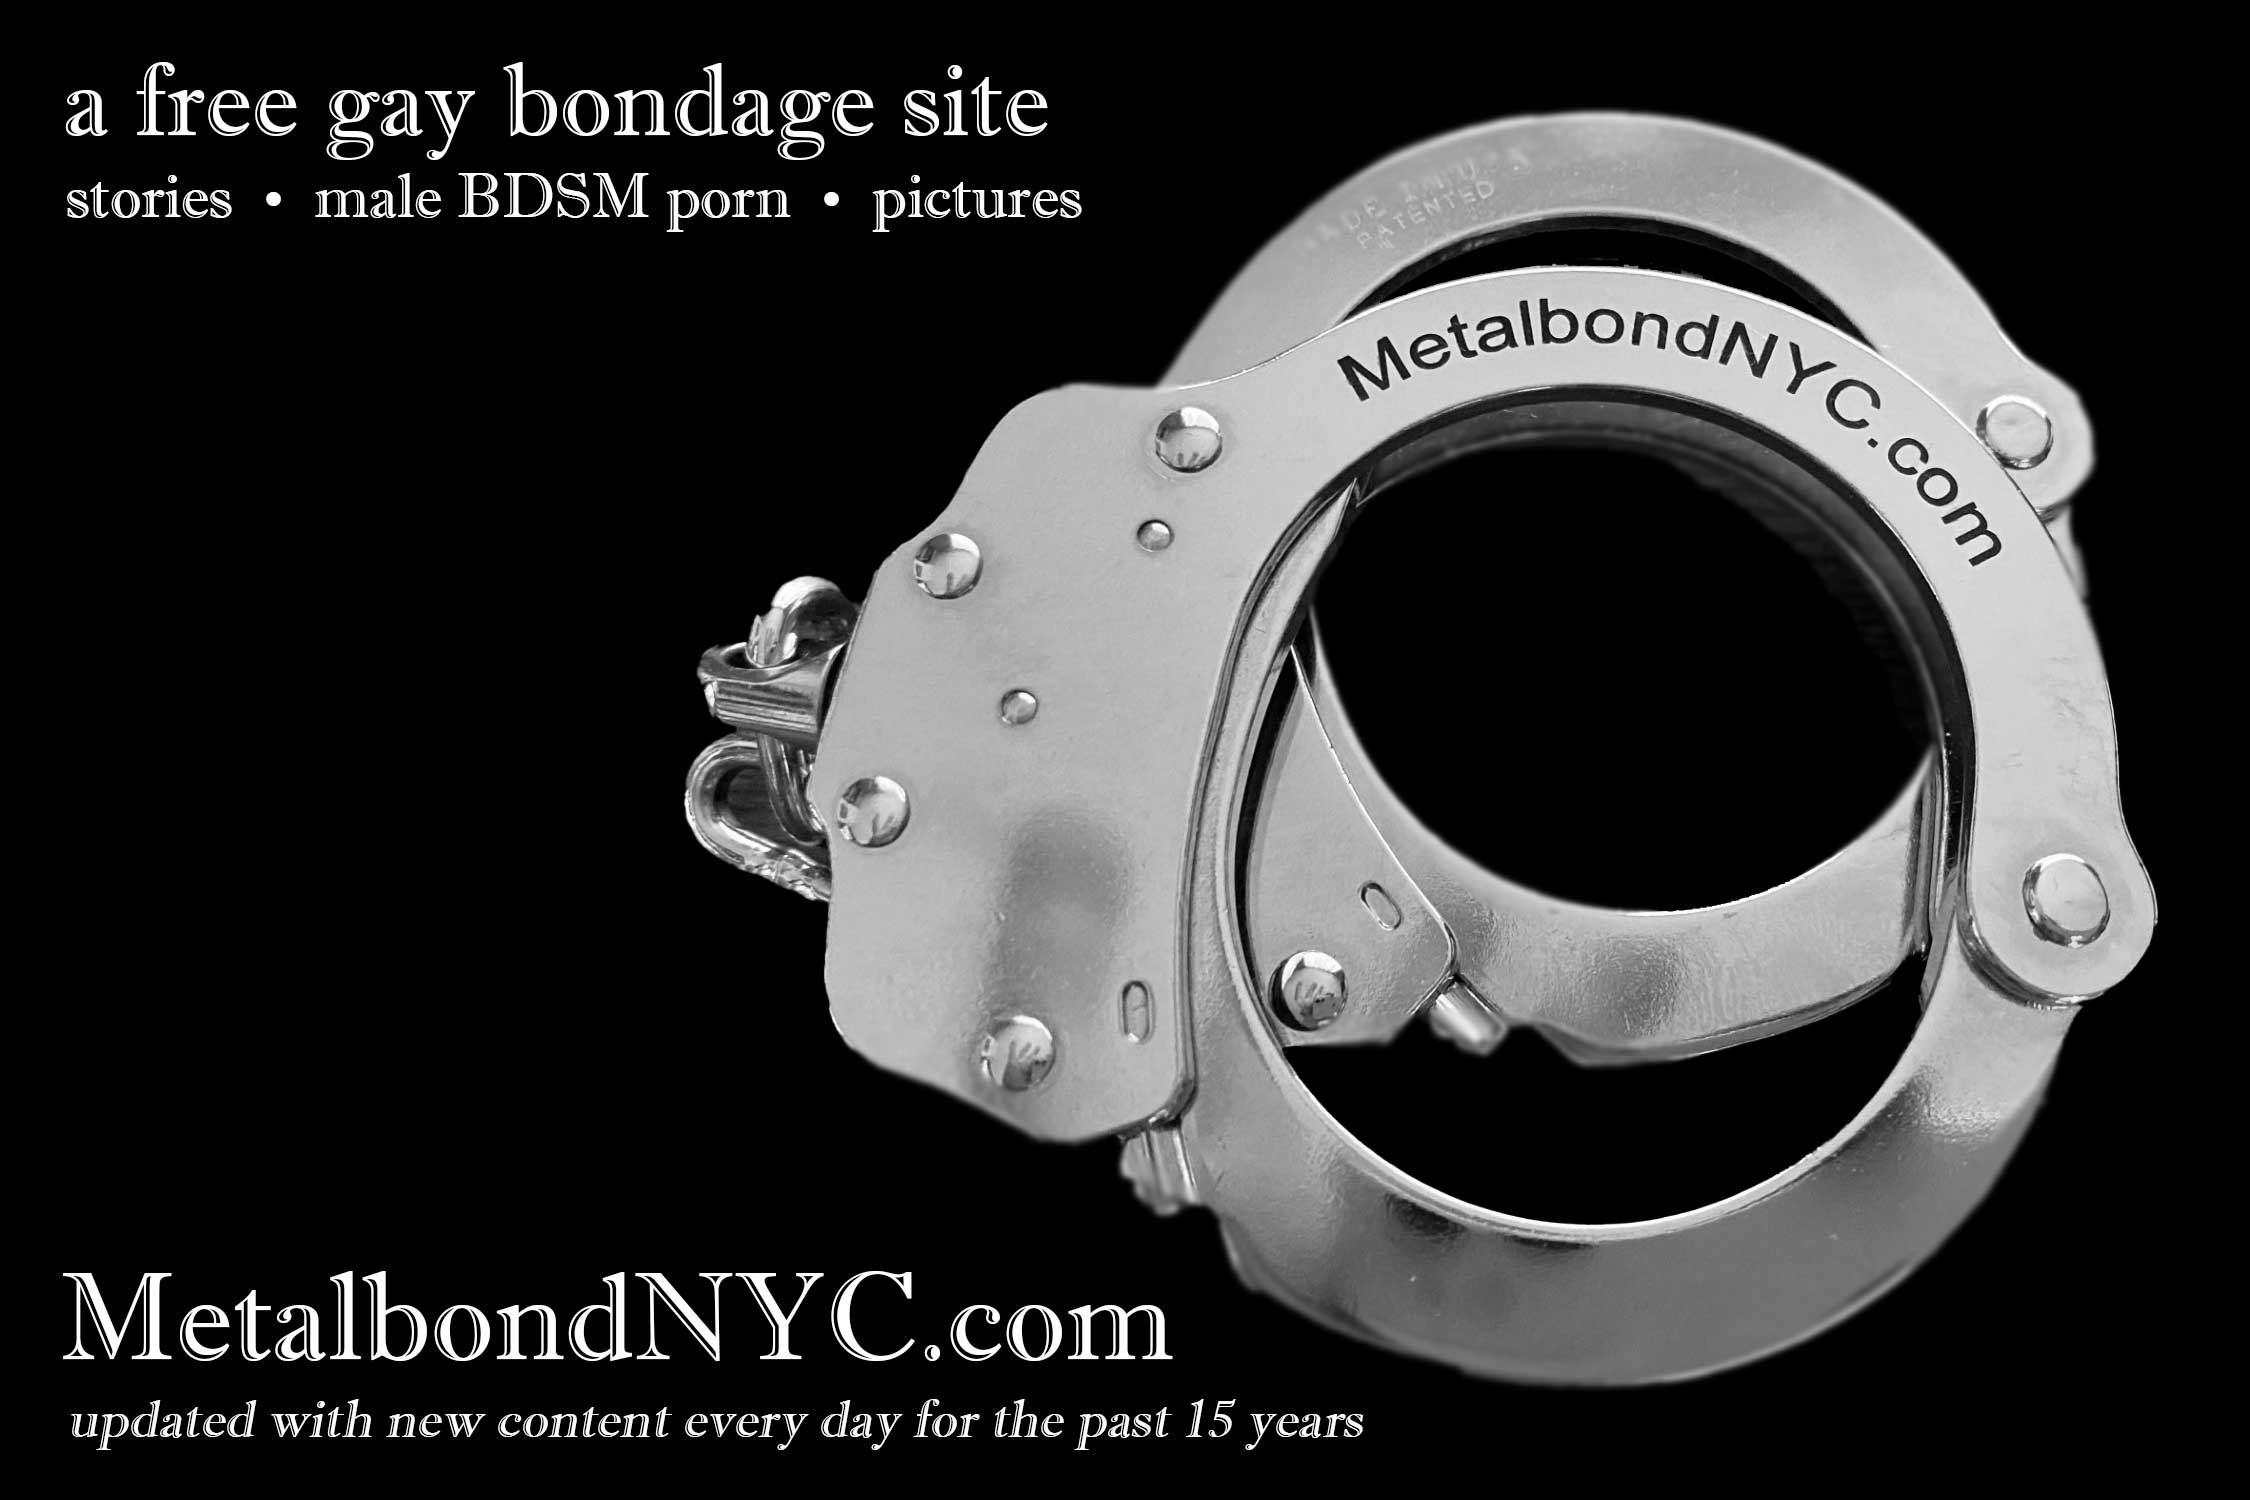 MetalbondNYC dot com 15 years of male bondage